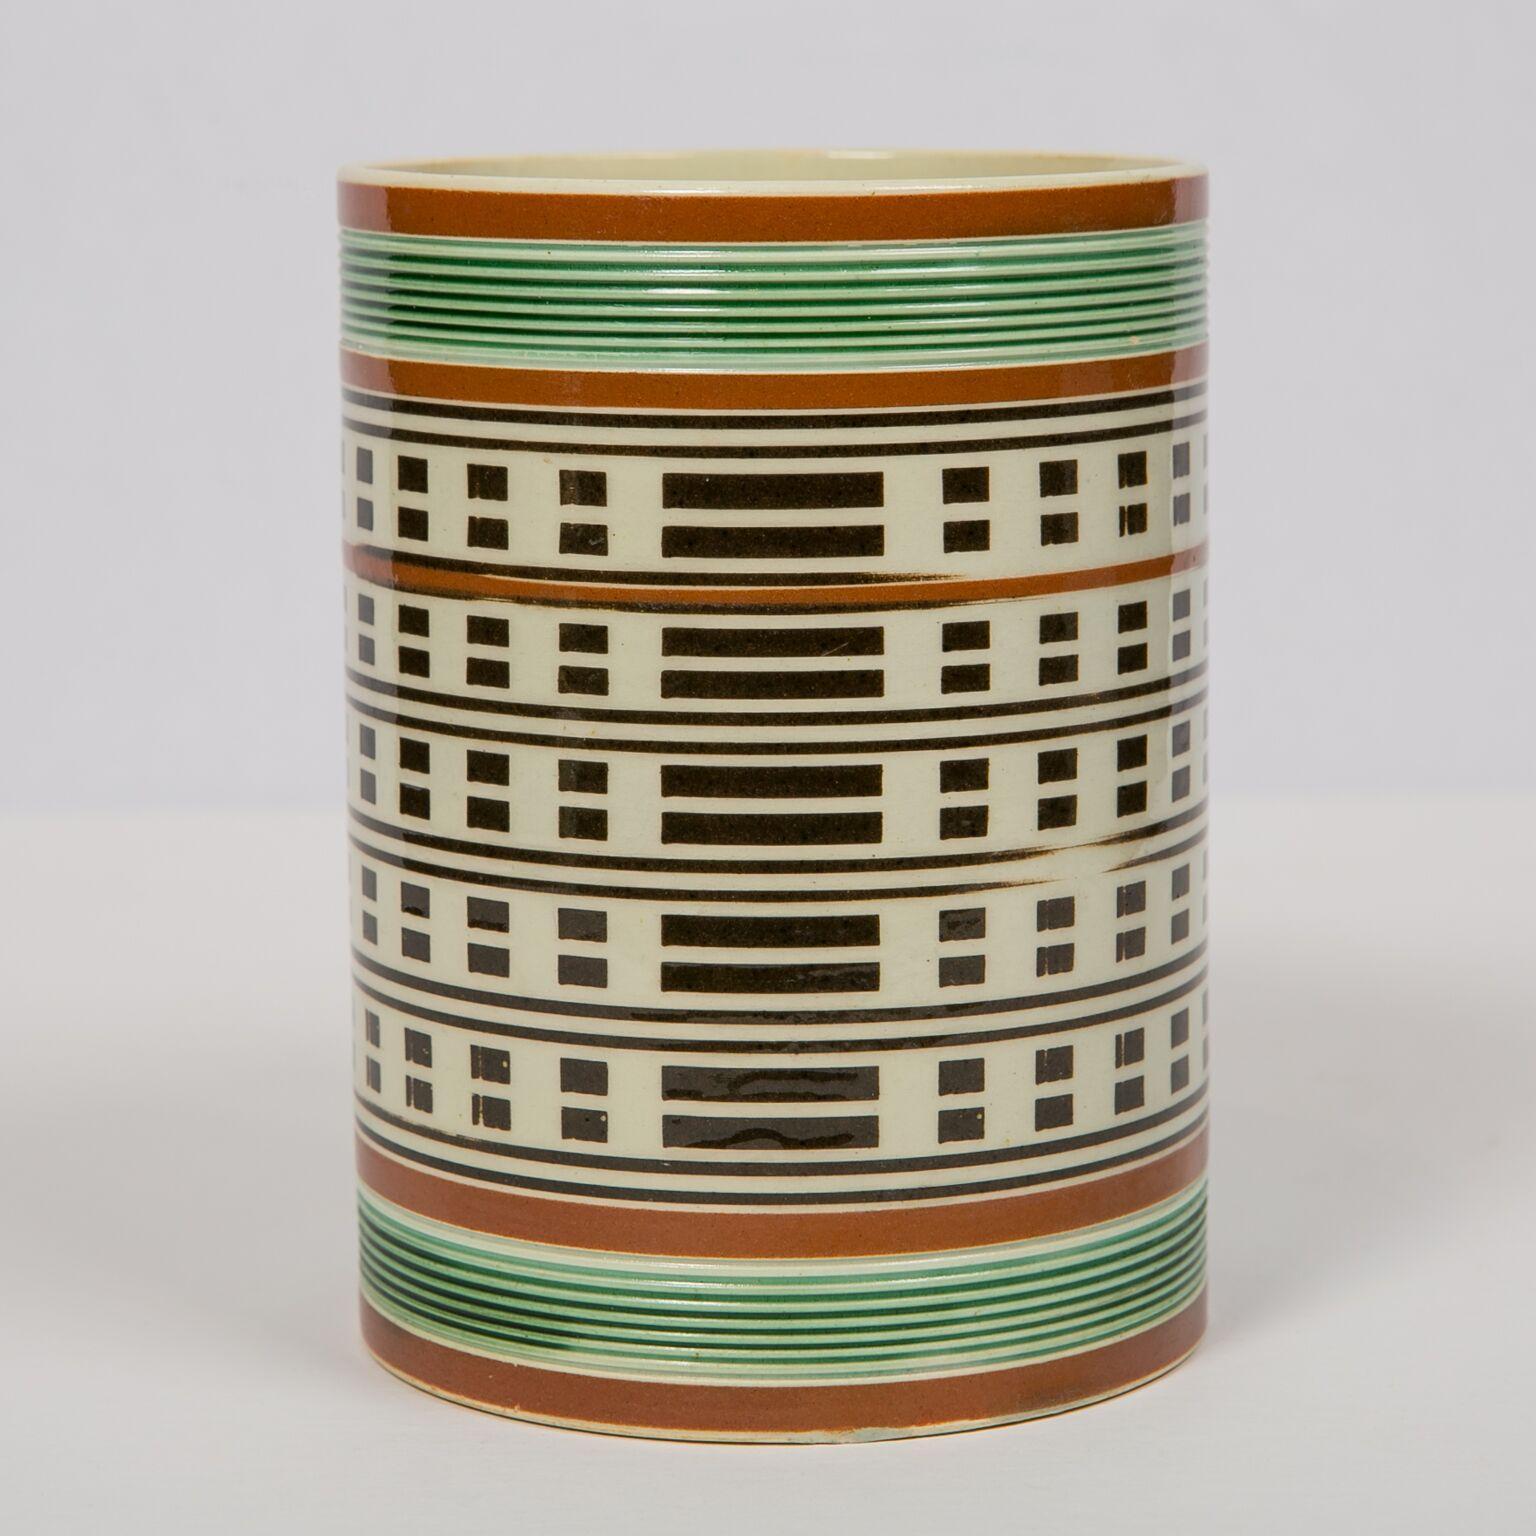 Earthenware Antique Mochaware Mug Slip Decorated Made in England, circa 1815